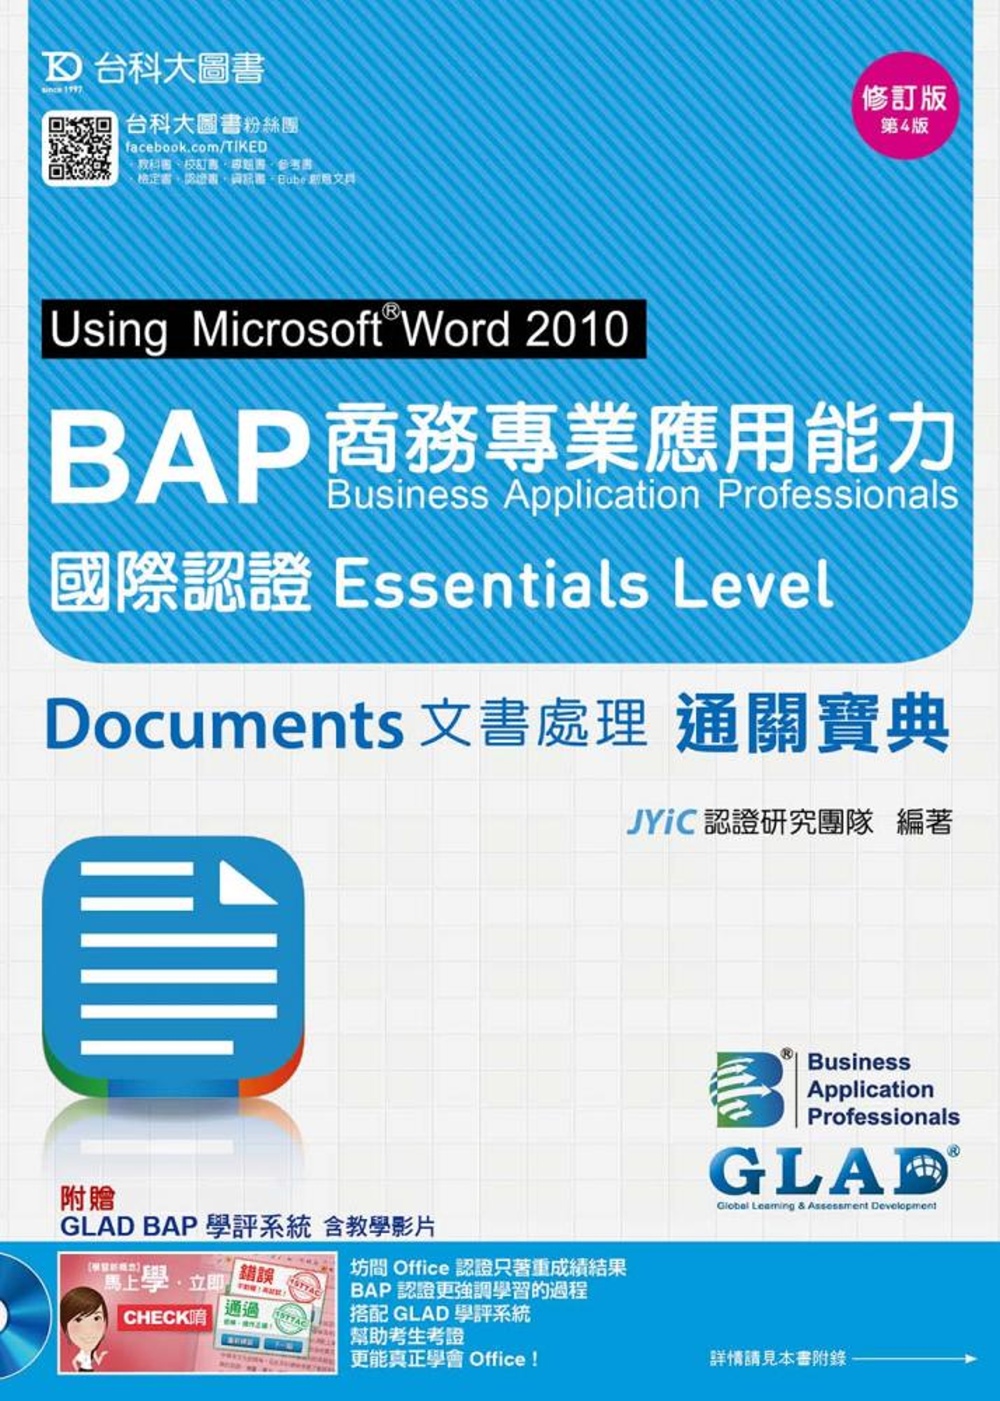 ►GO►最新優惠► 【書籍】BAP Documents文書處理Using Microsoft® Word 2010商務專業應用能力國際認證Essentials Level通關寶典-修訂版(第四版)(附贈BAP學評系統含教學影片)